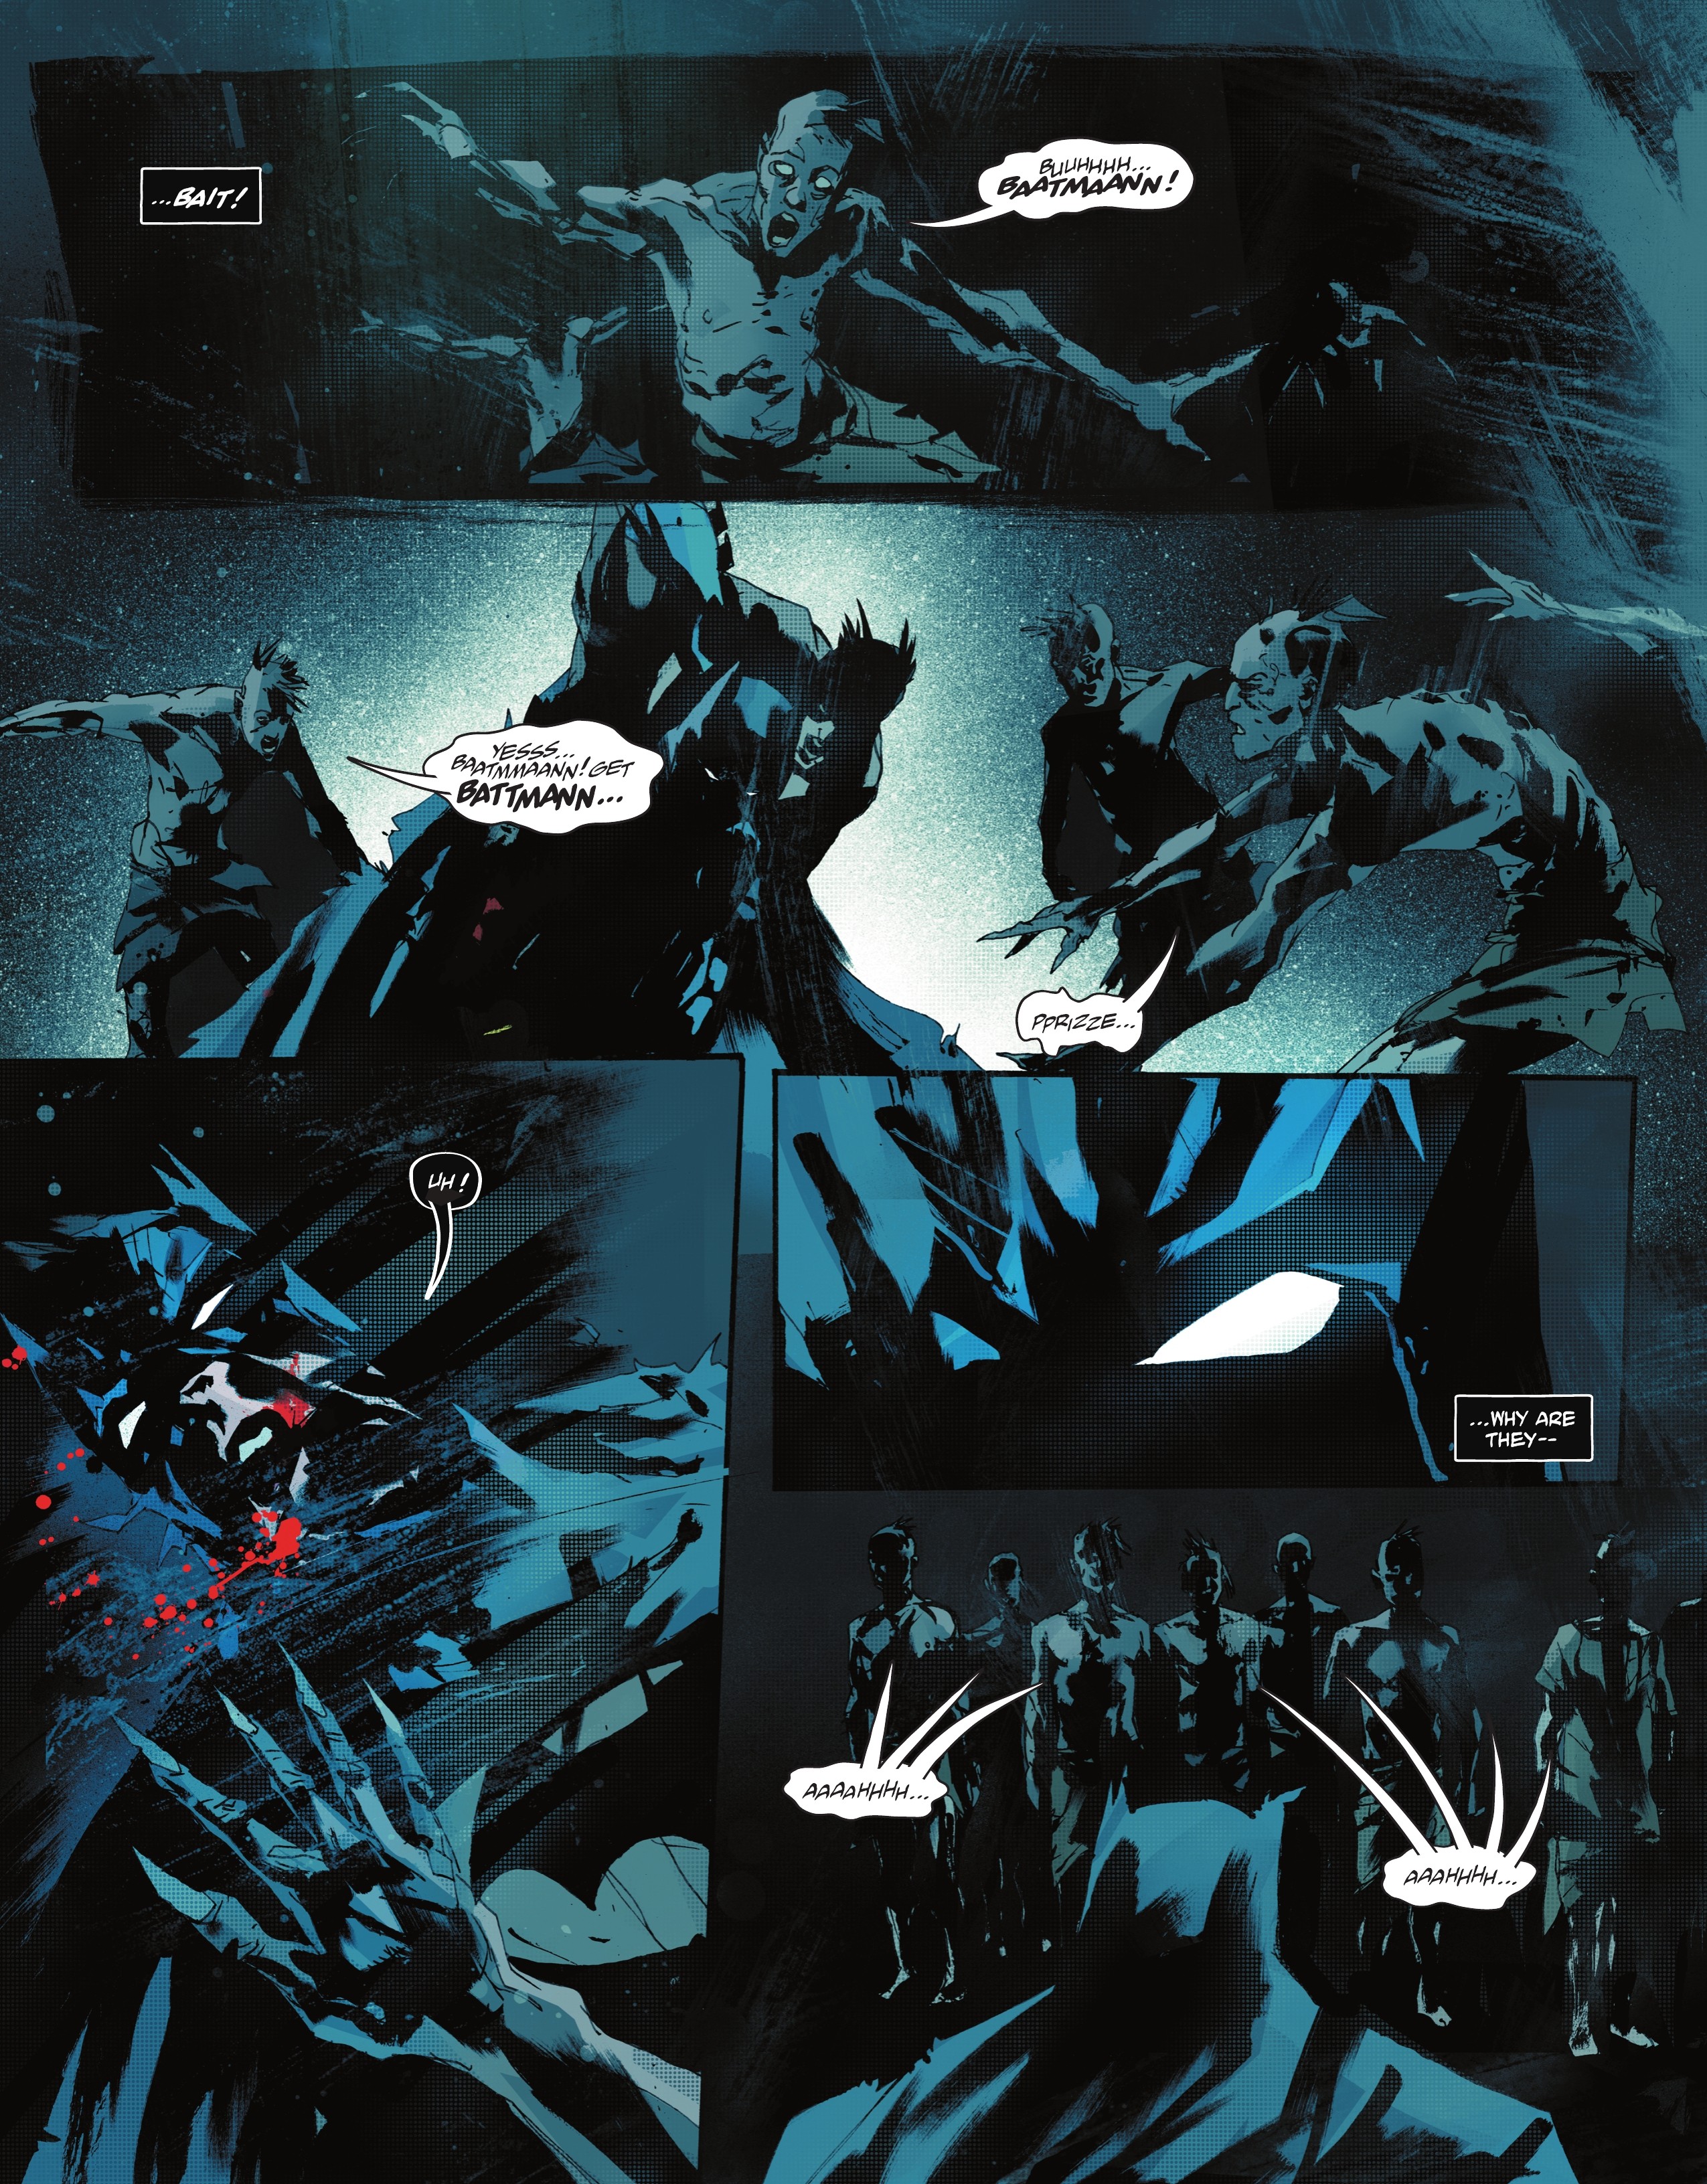 Манга ограниченный временем темный рыцарь 53. Бэтмен 2022 Готэм. Бэтмен DC Comics арт. Бэтмен третий. Бэтмен 2022 комикс.